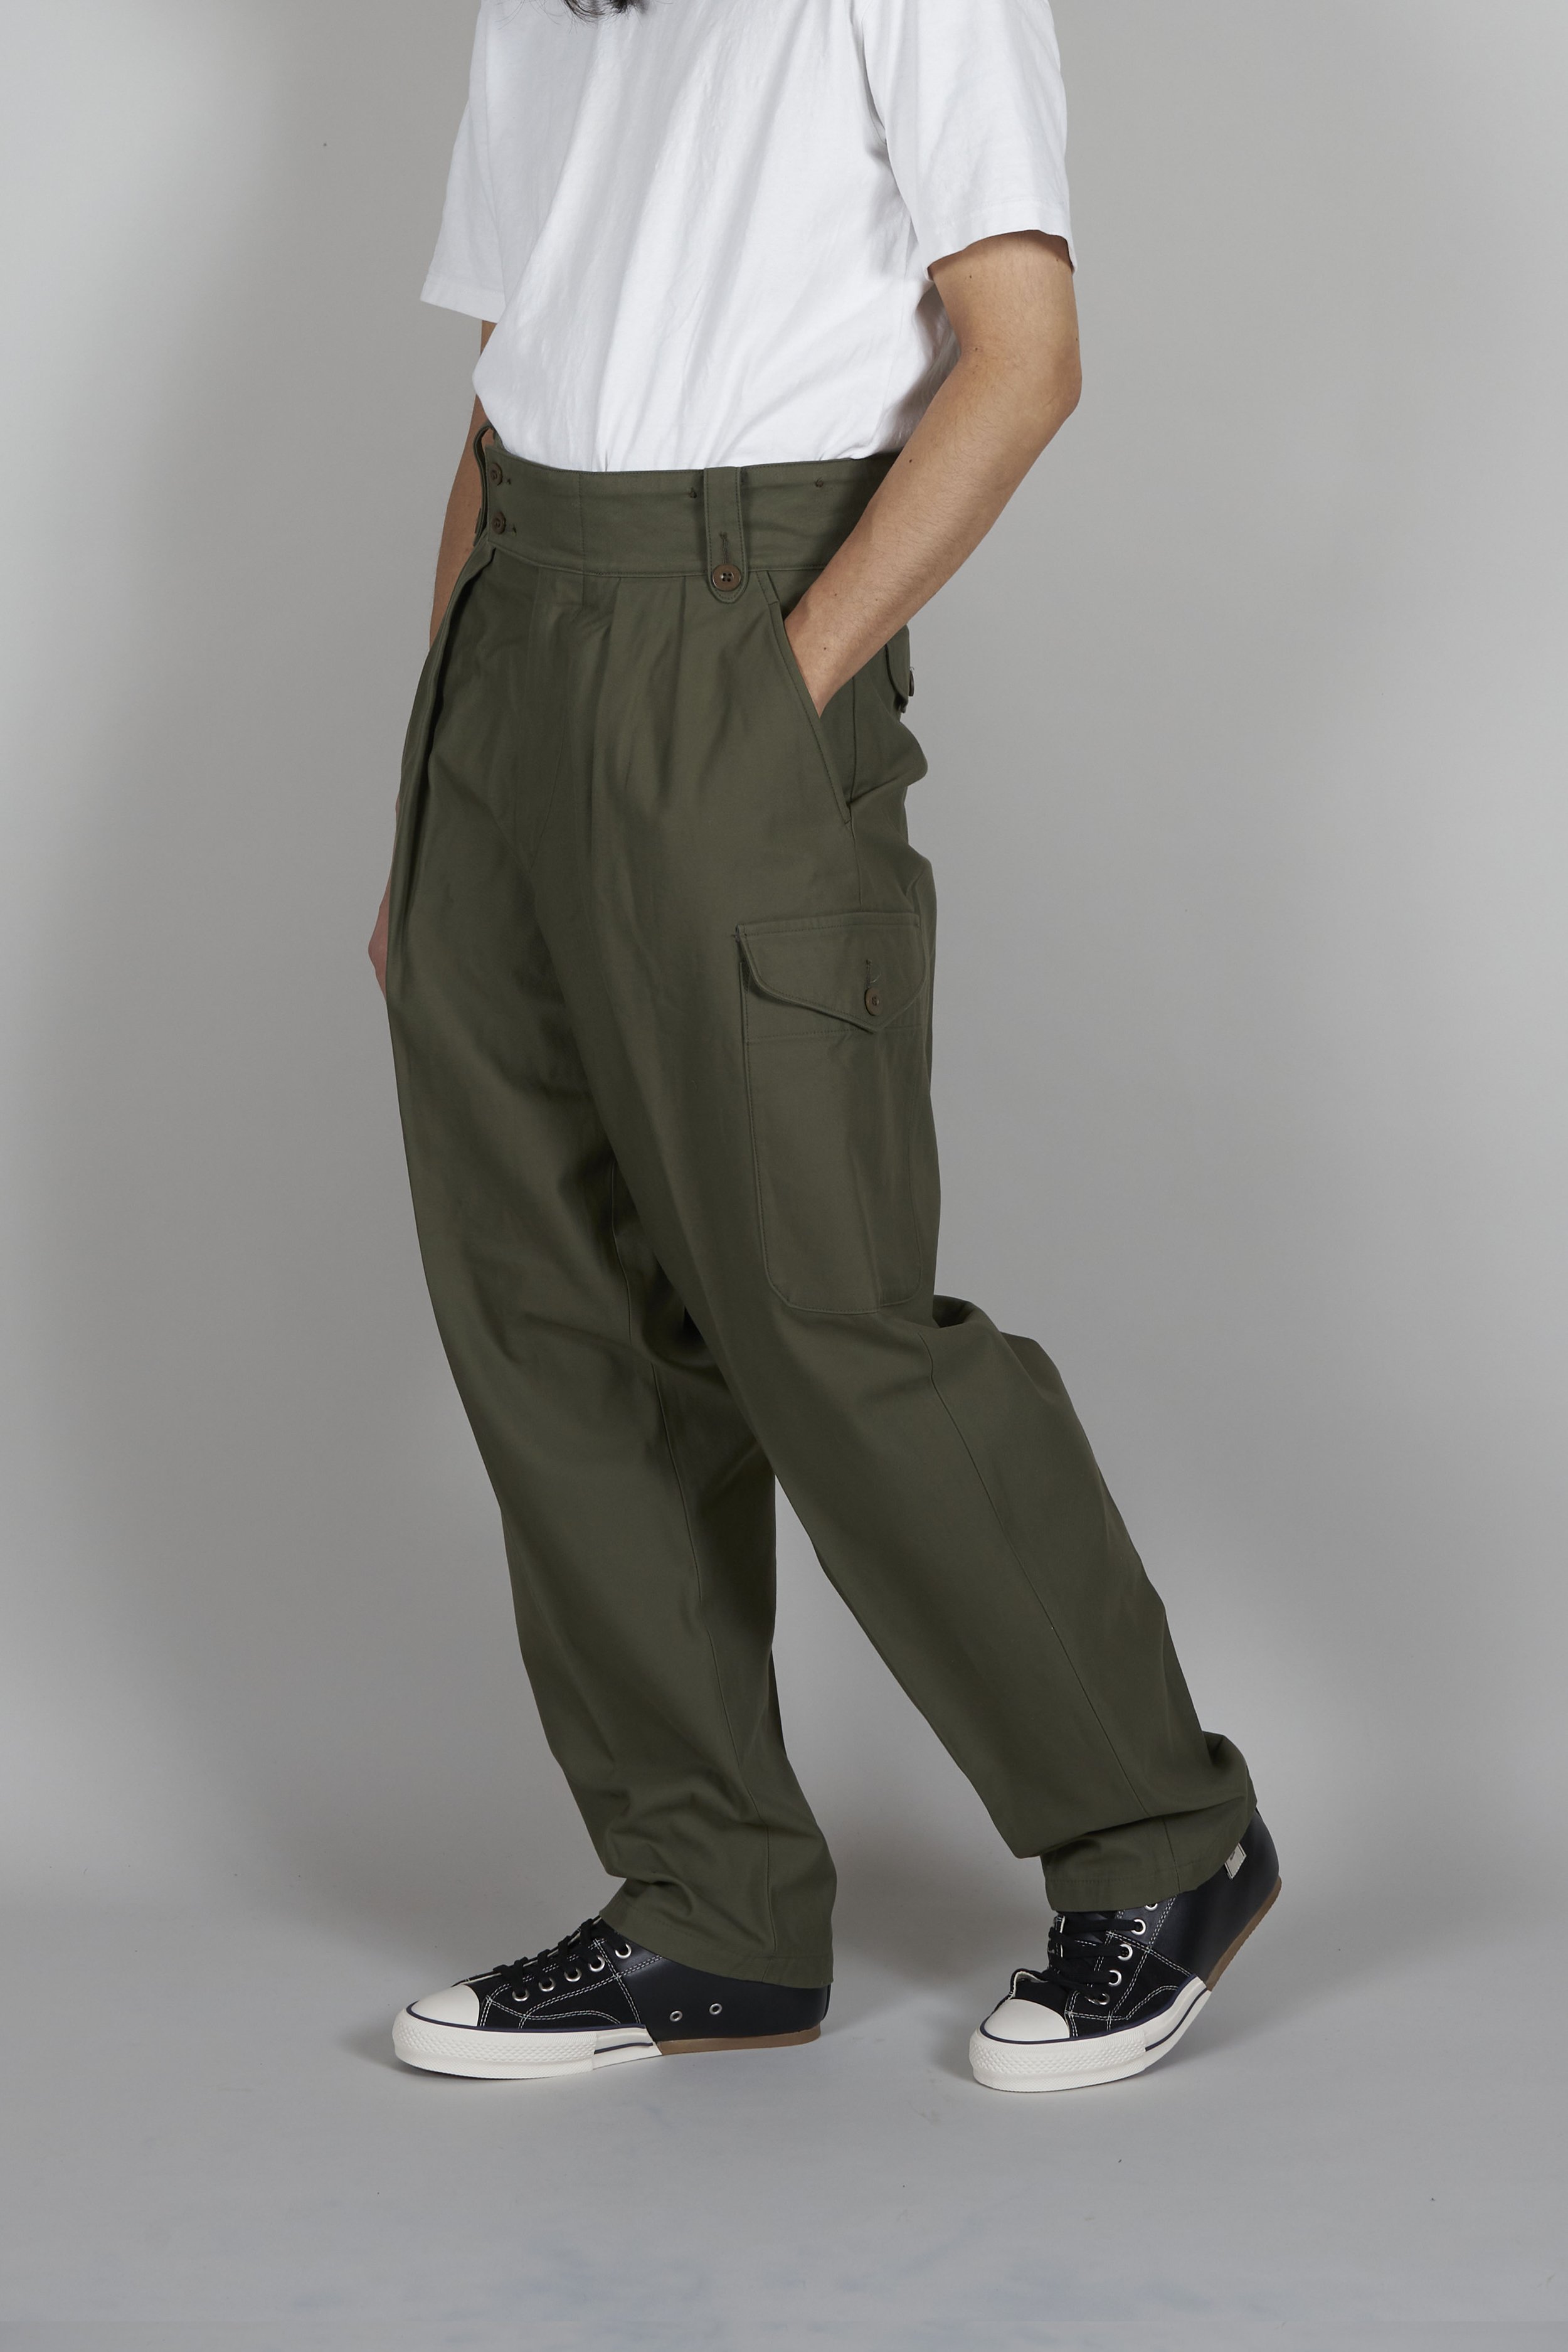 Nigel Cabourn Japan 50s Battle Dress Modified Pant Green — Store Du Nord